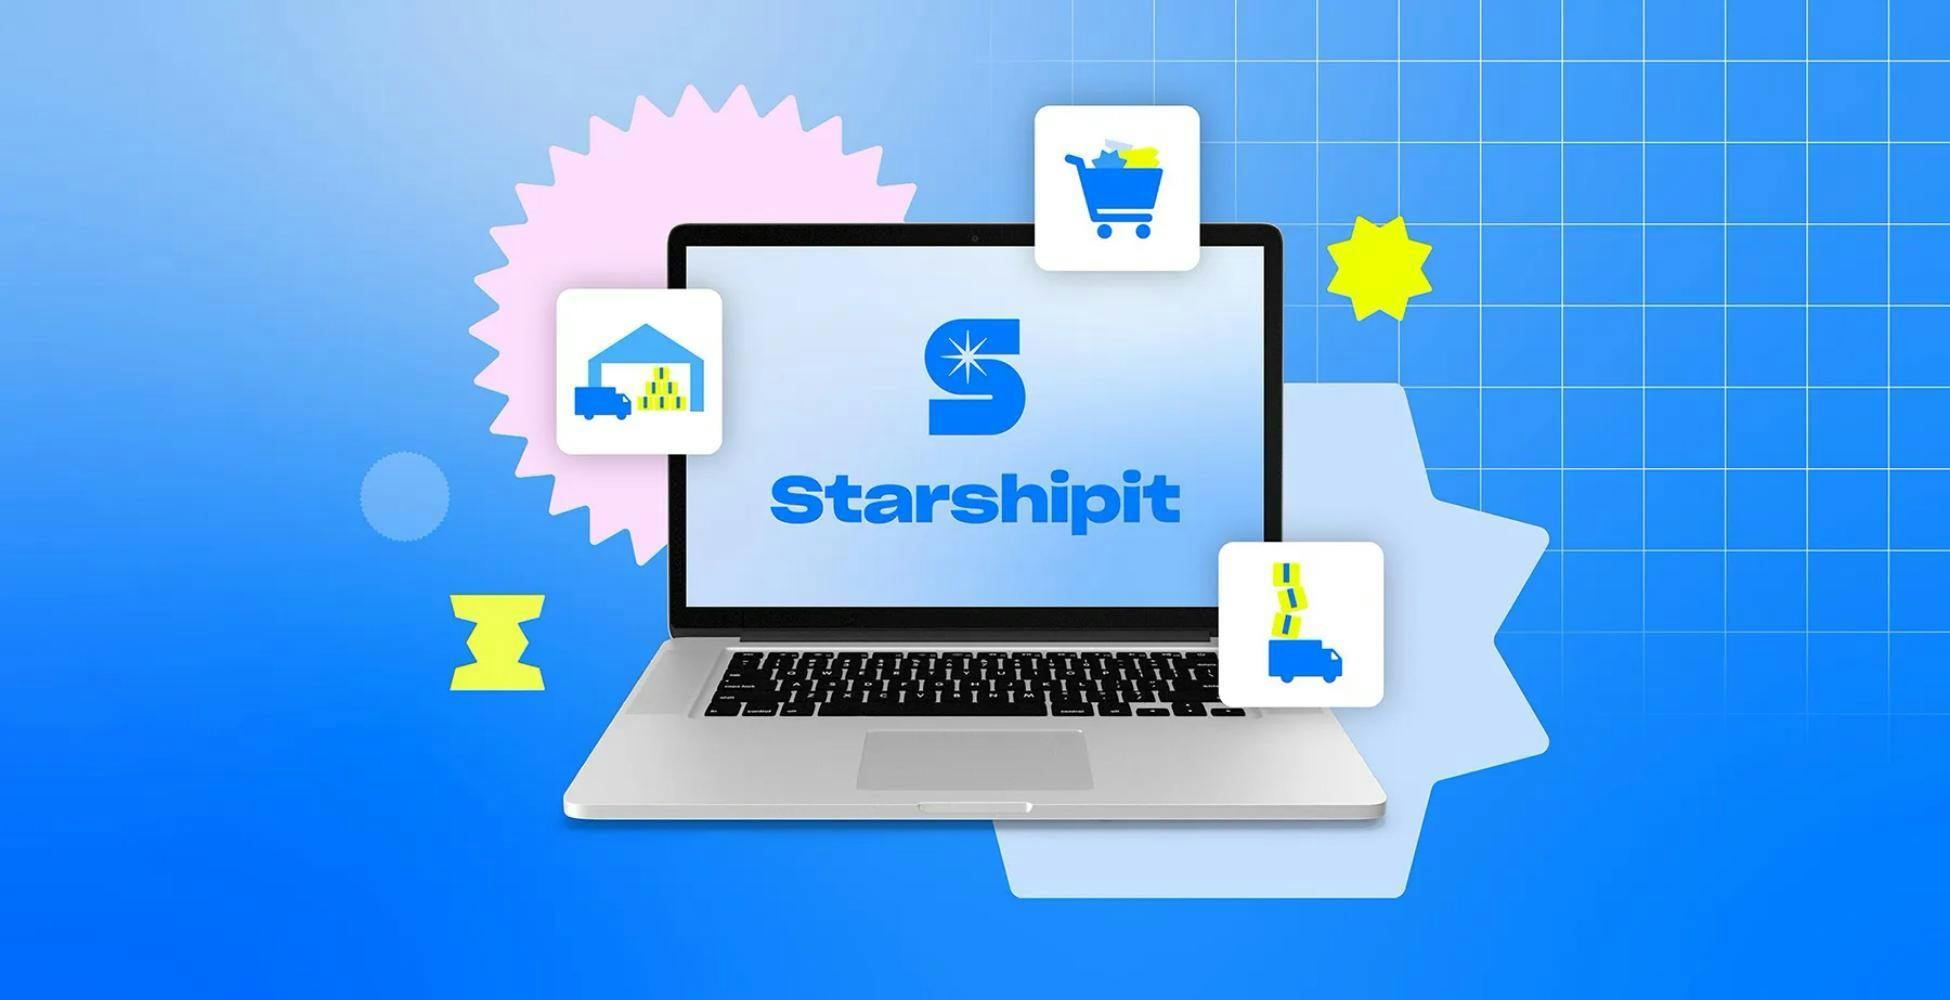 Starshipit illustration of laptop with different symbols arranged around